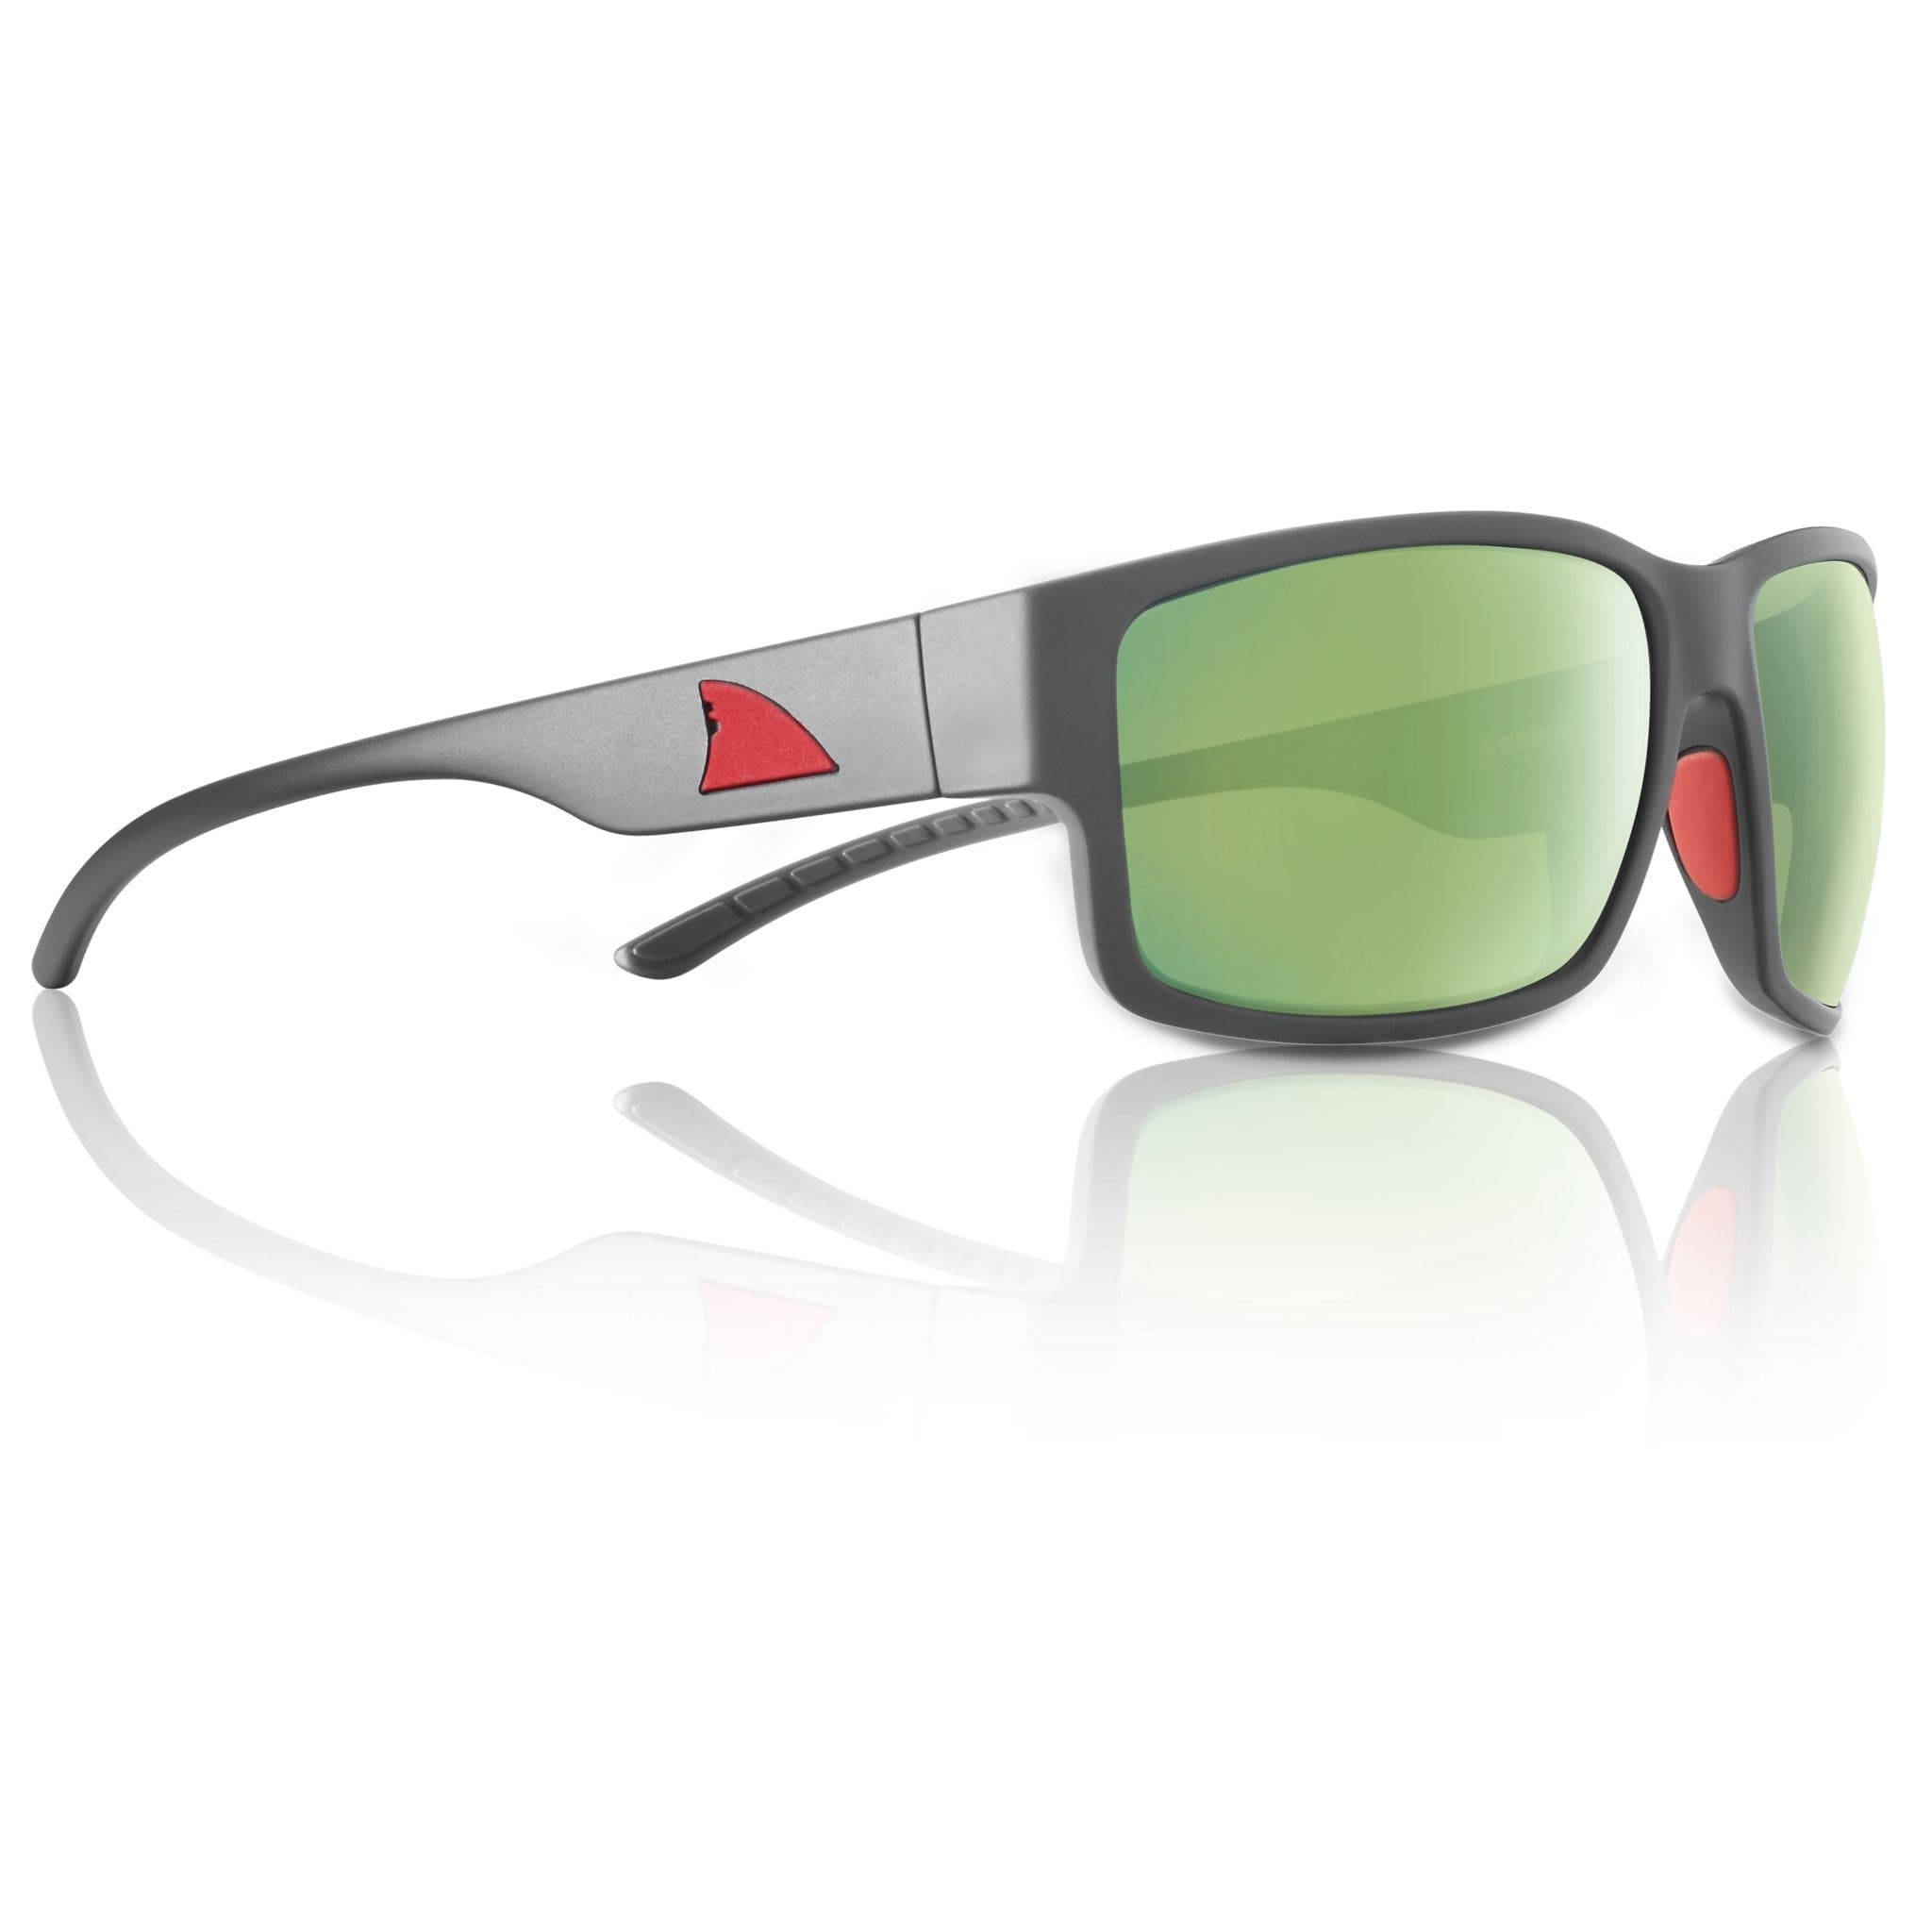 RedFin Sanibel Polarized Fishing Sunglasses